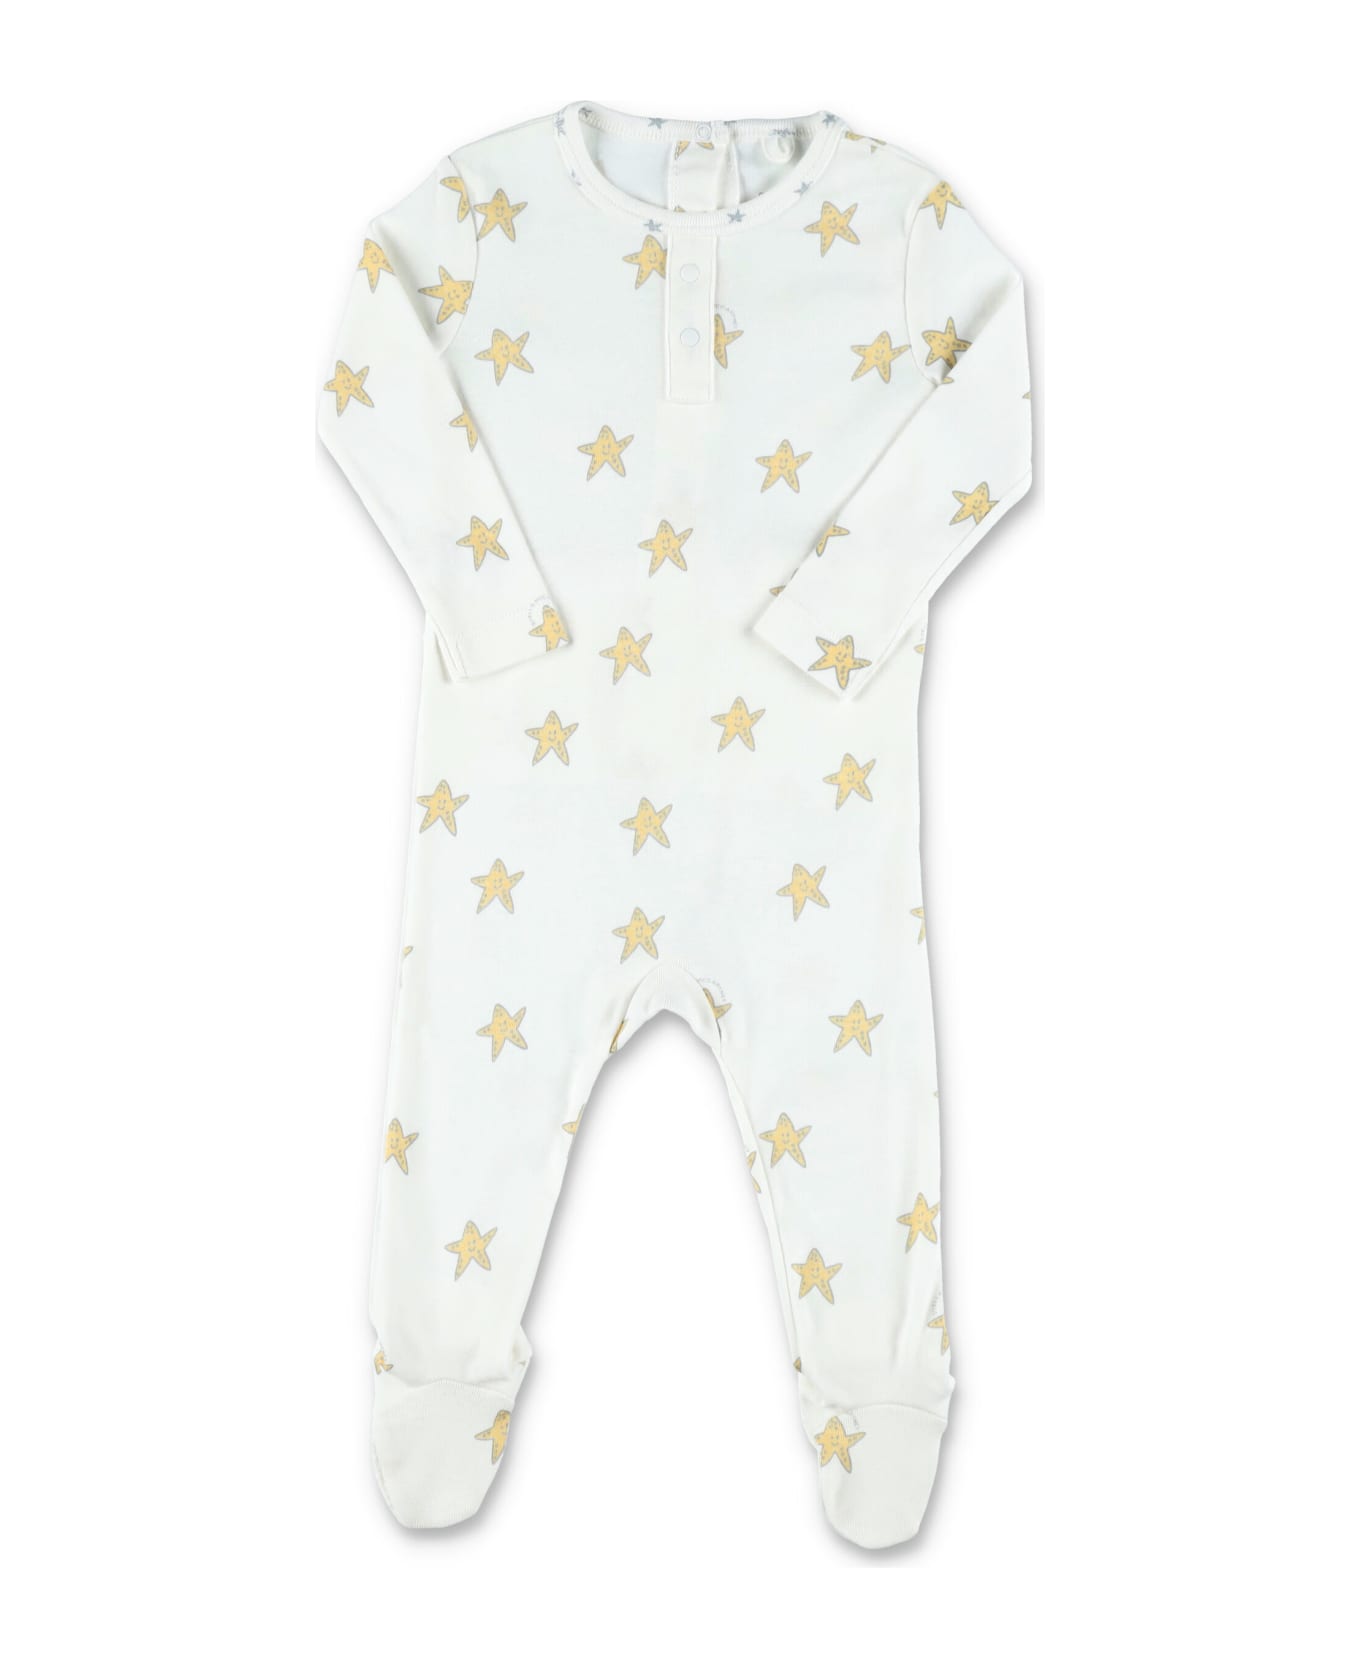 Stella McCartney Kids Smiling Star Print Baby Gift Set - WHITE ジャンプスーツ